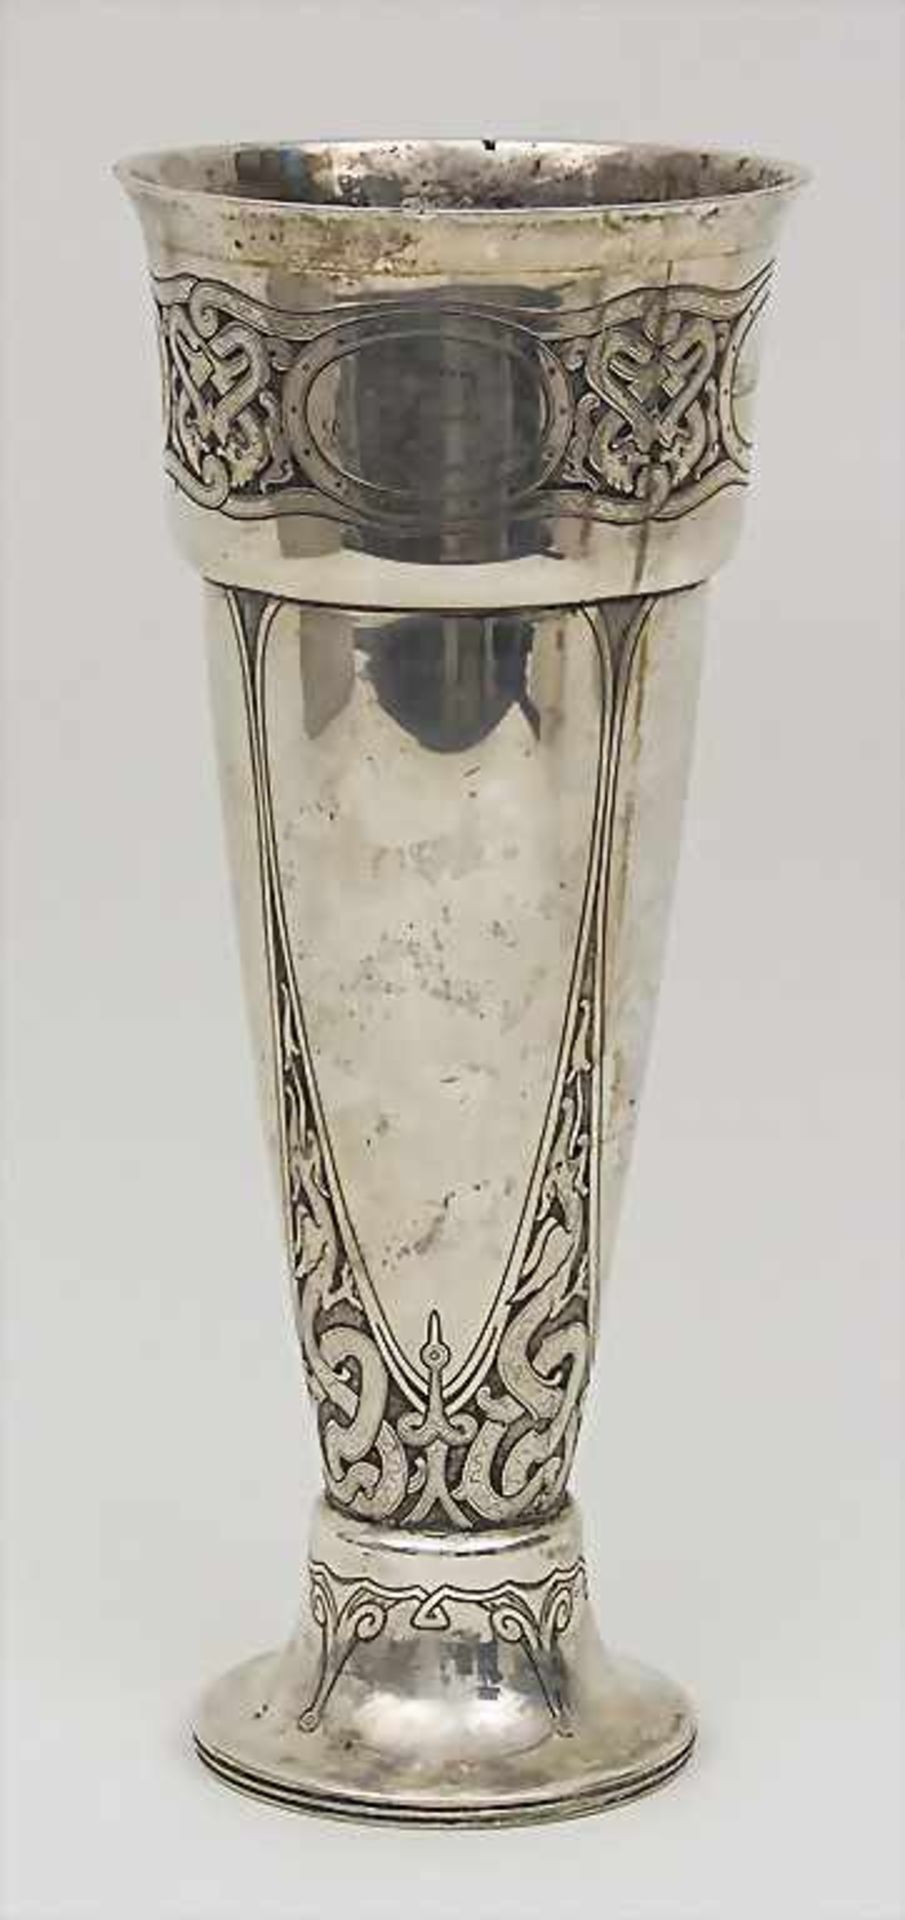 Jugendstil Vase / An Art Nouveau Vase, Copenhagen, 1909Material: Silber 925, Widmung für Vilhelm